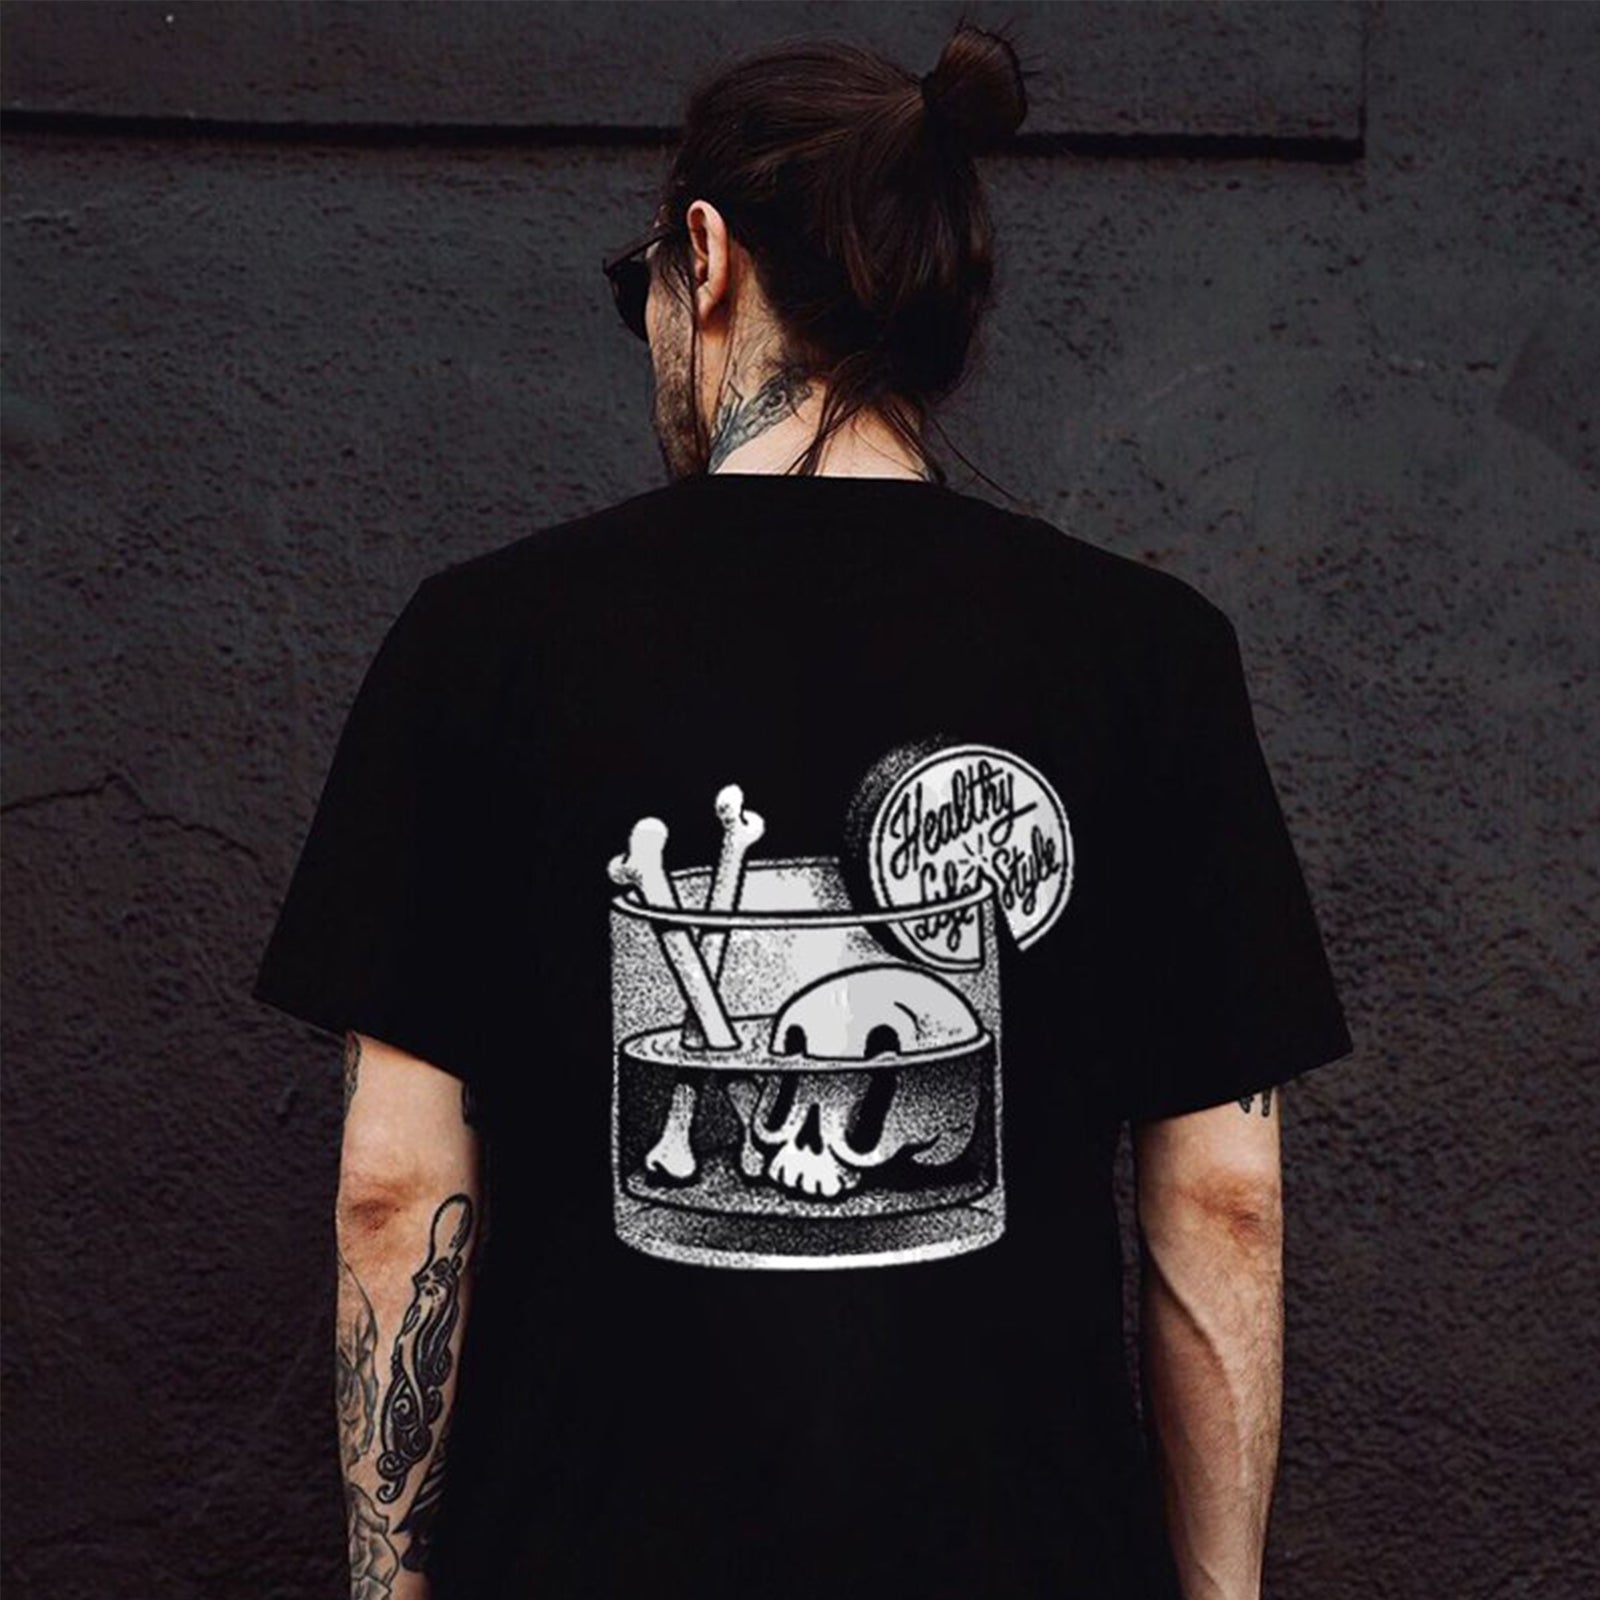 Cloeinc Funny Skull Printed Casual T-Shirt - chicyea